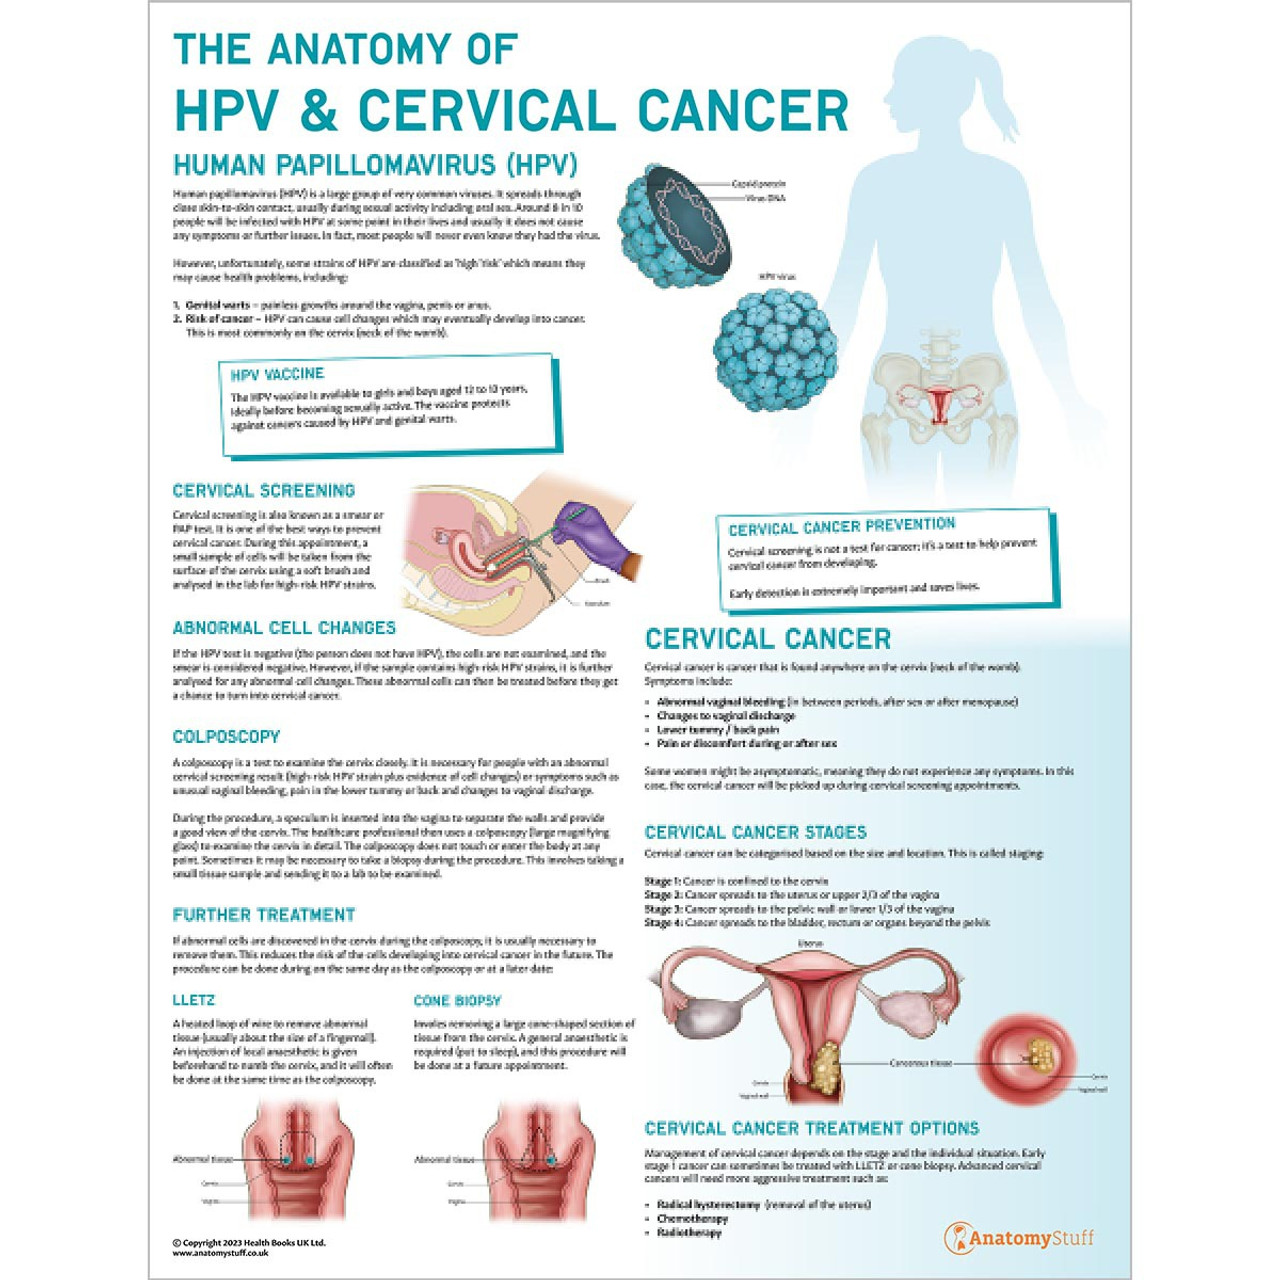 cervical cancer vaccine poster